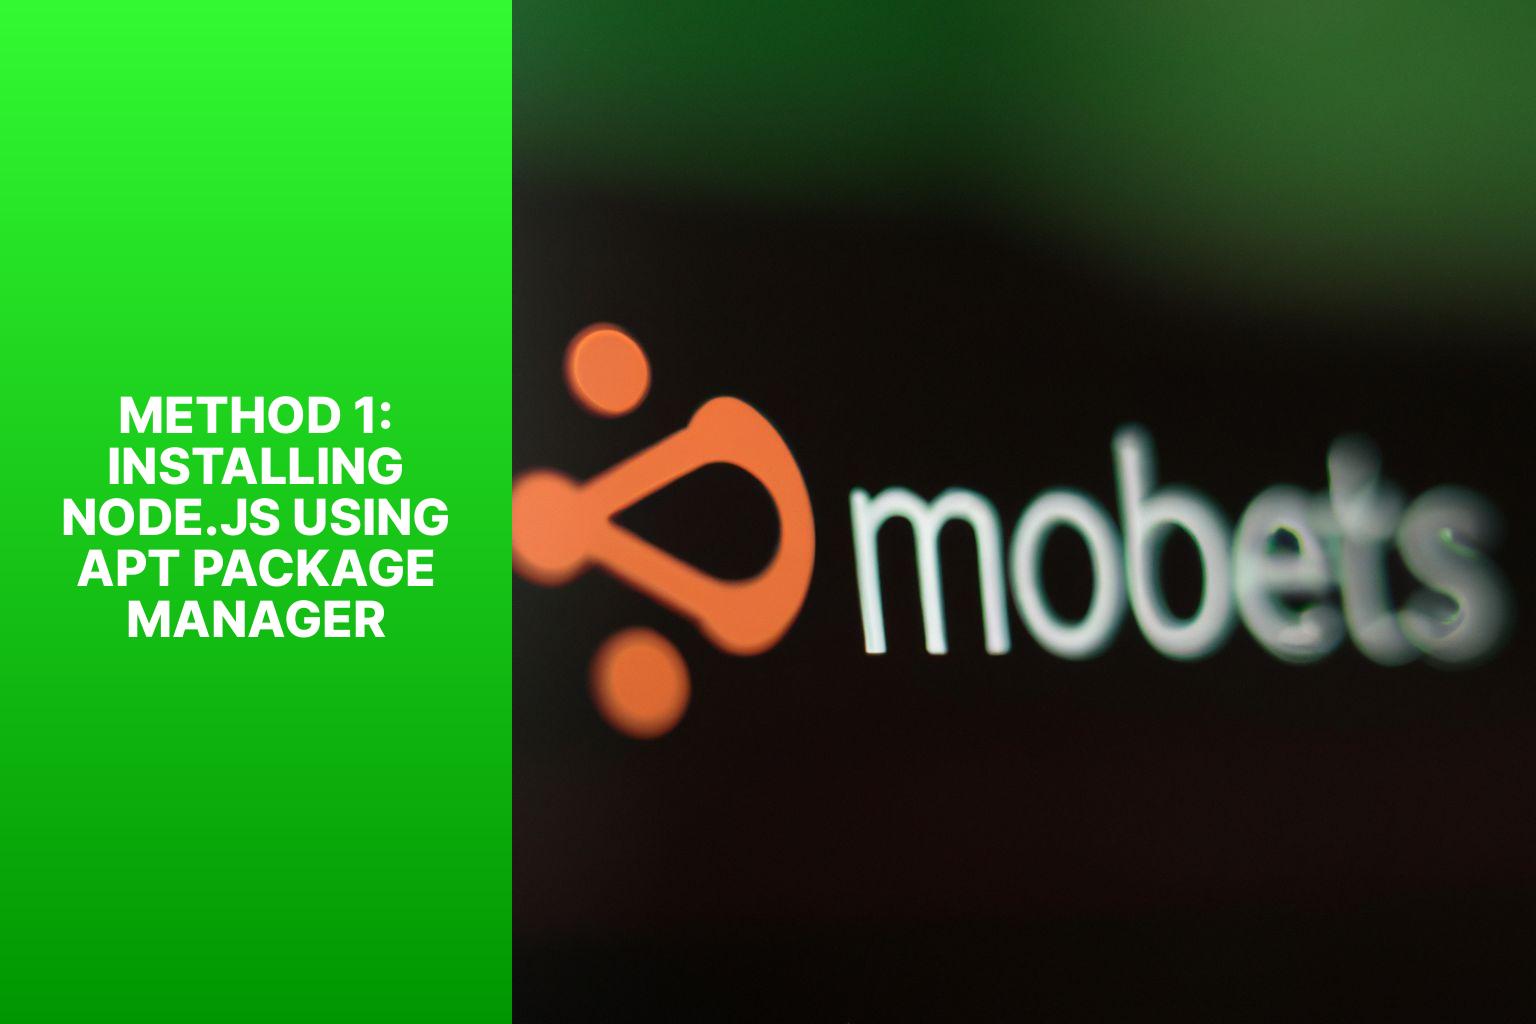 Method 1: Installing Node.js using apt package manager - how to install nodejs on ubuntu 